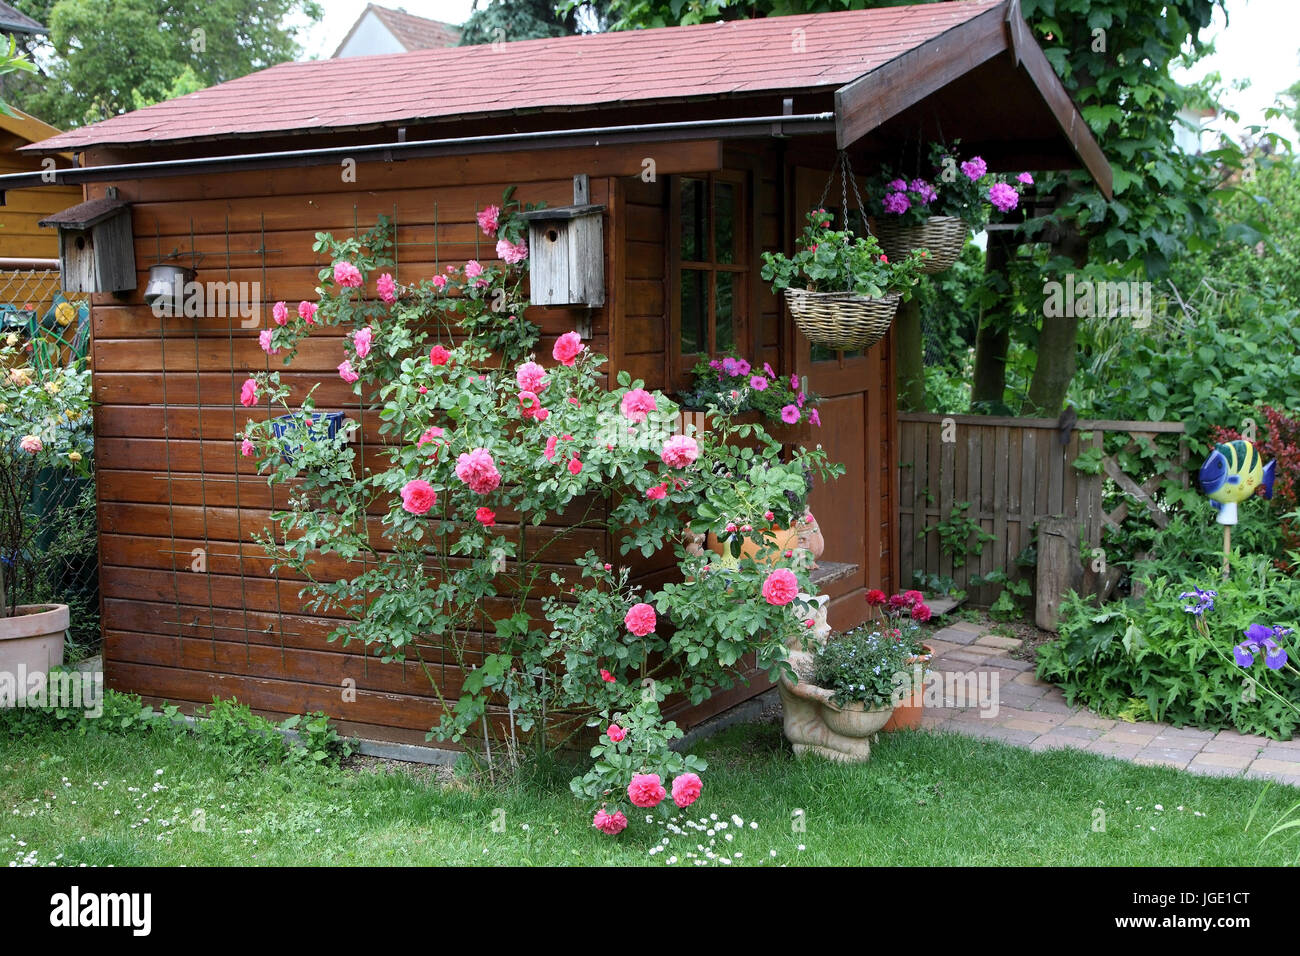 Summer house with roses, Gartenhaus mit Rosen Stock Photo